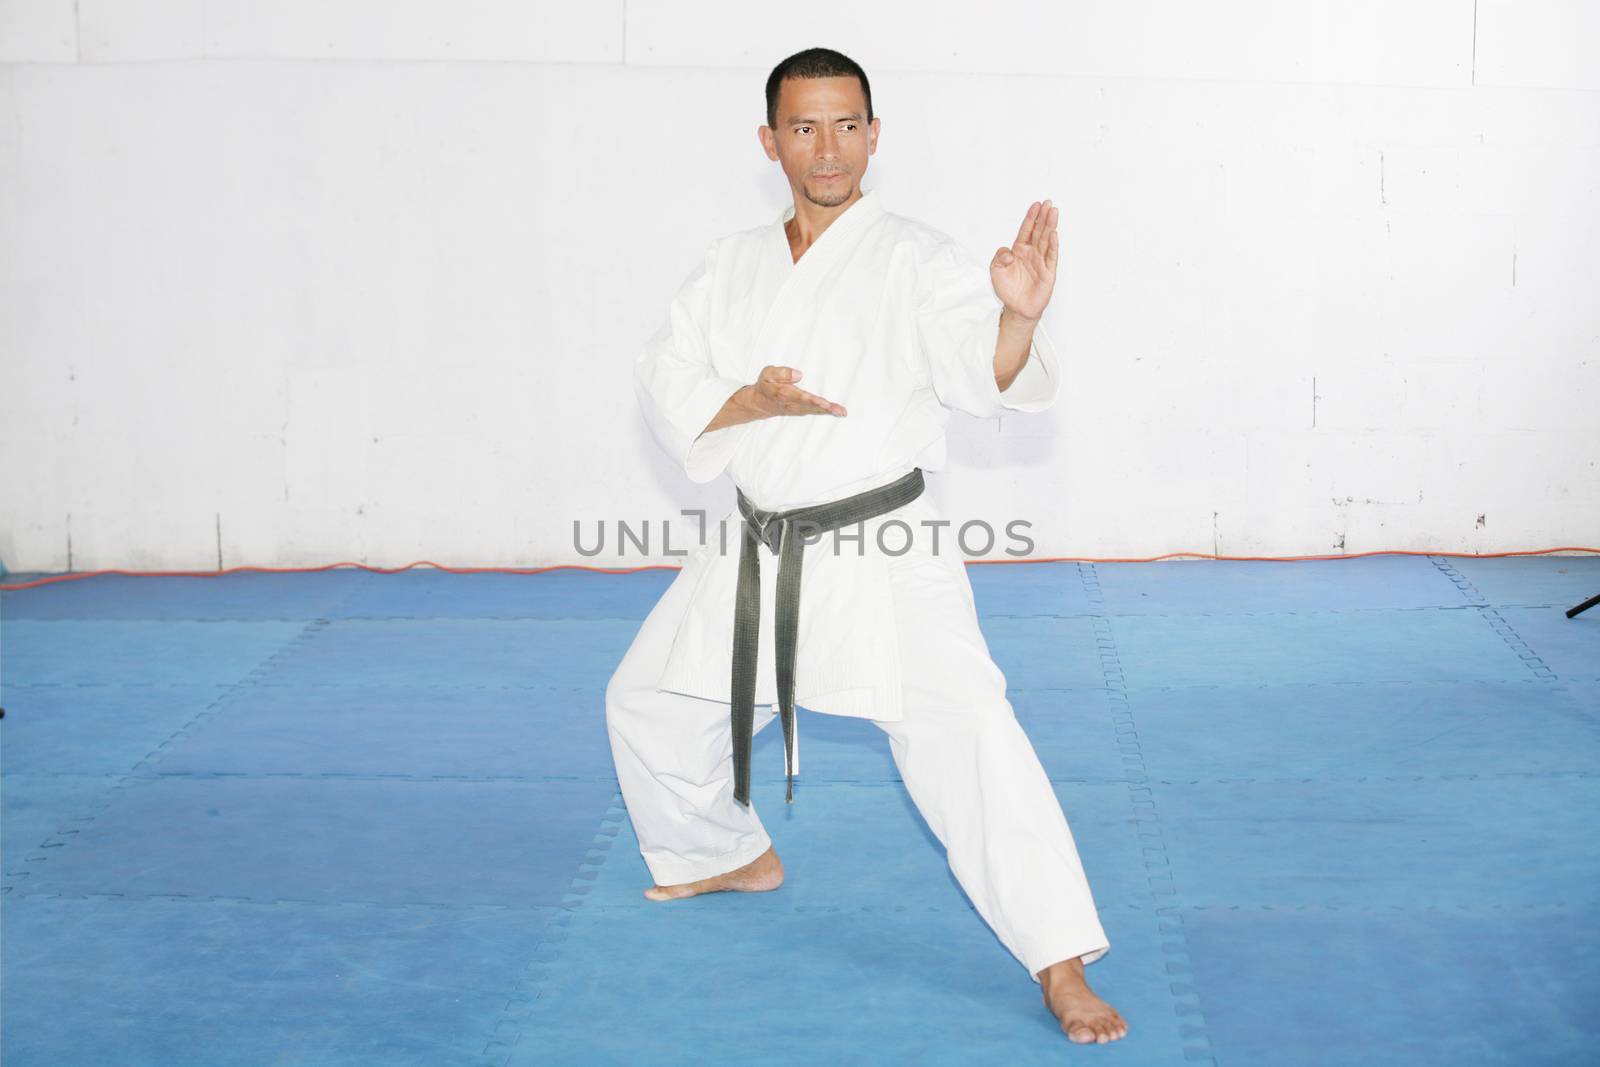 Black belt karate man with hand in spade position by dacasdo